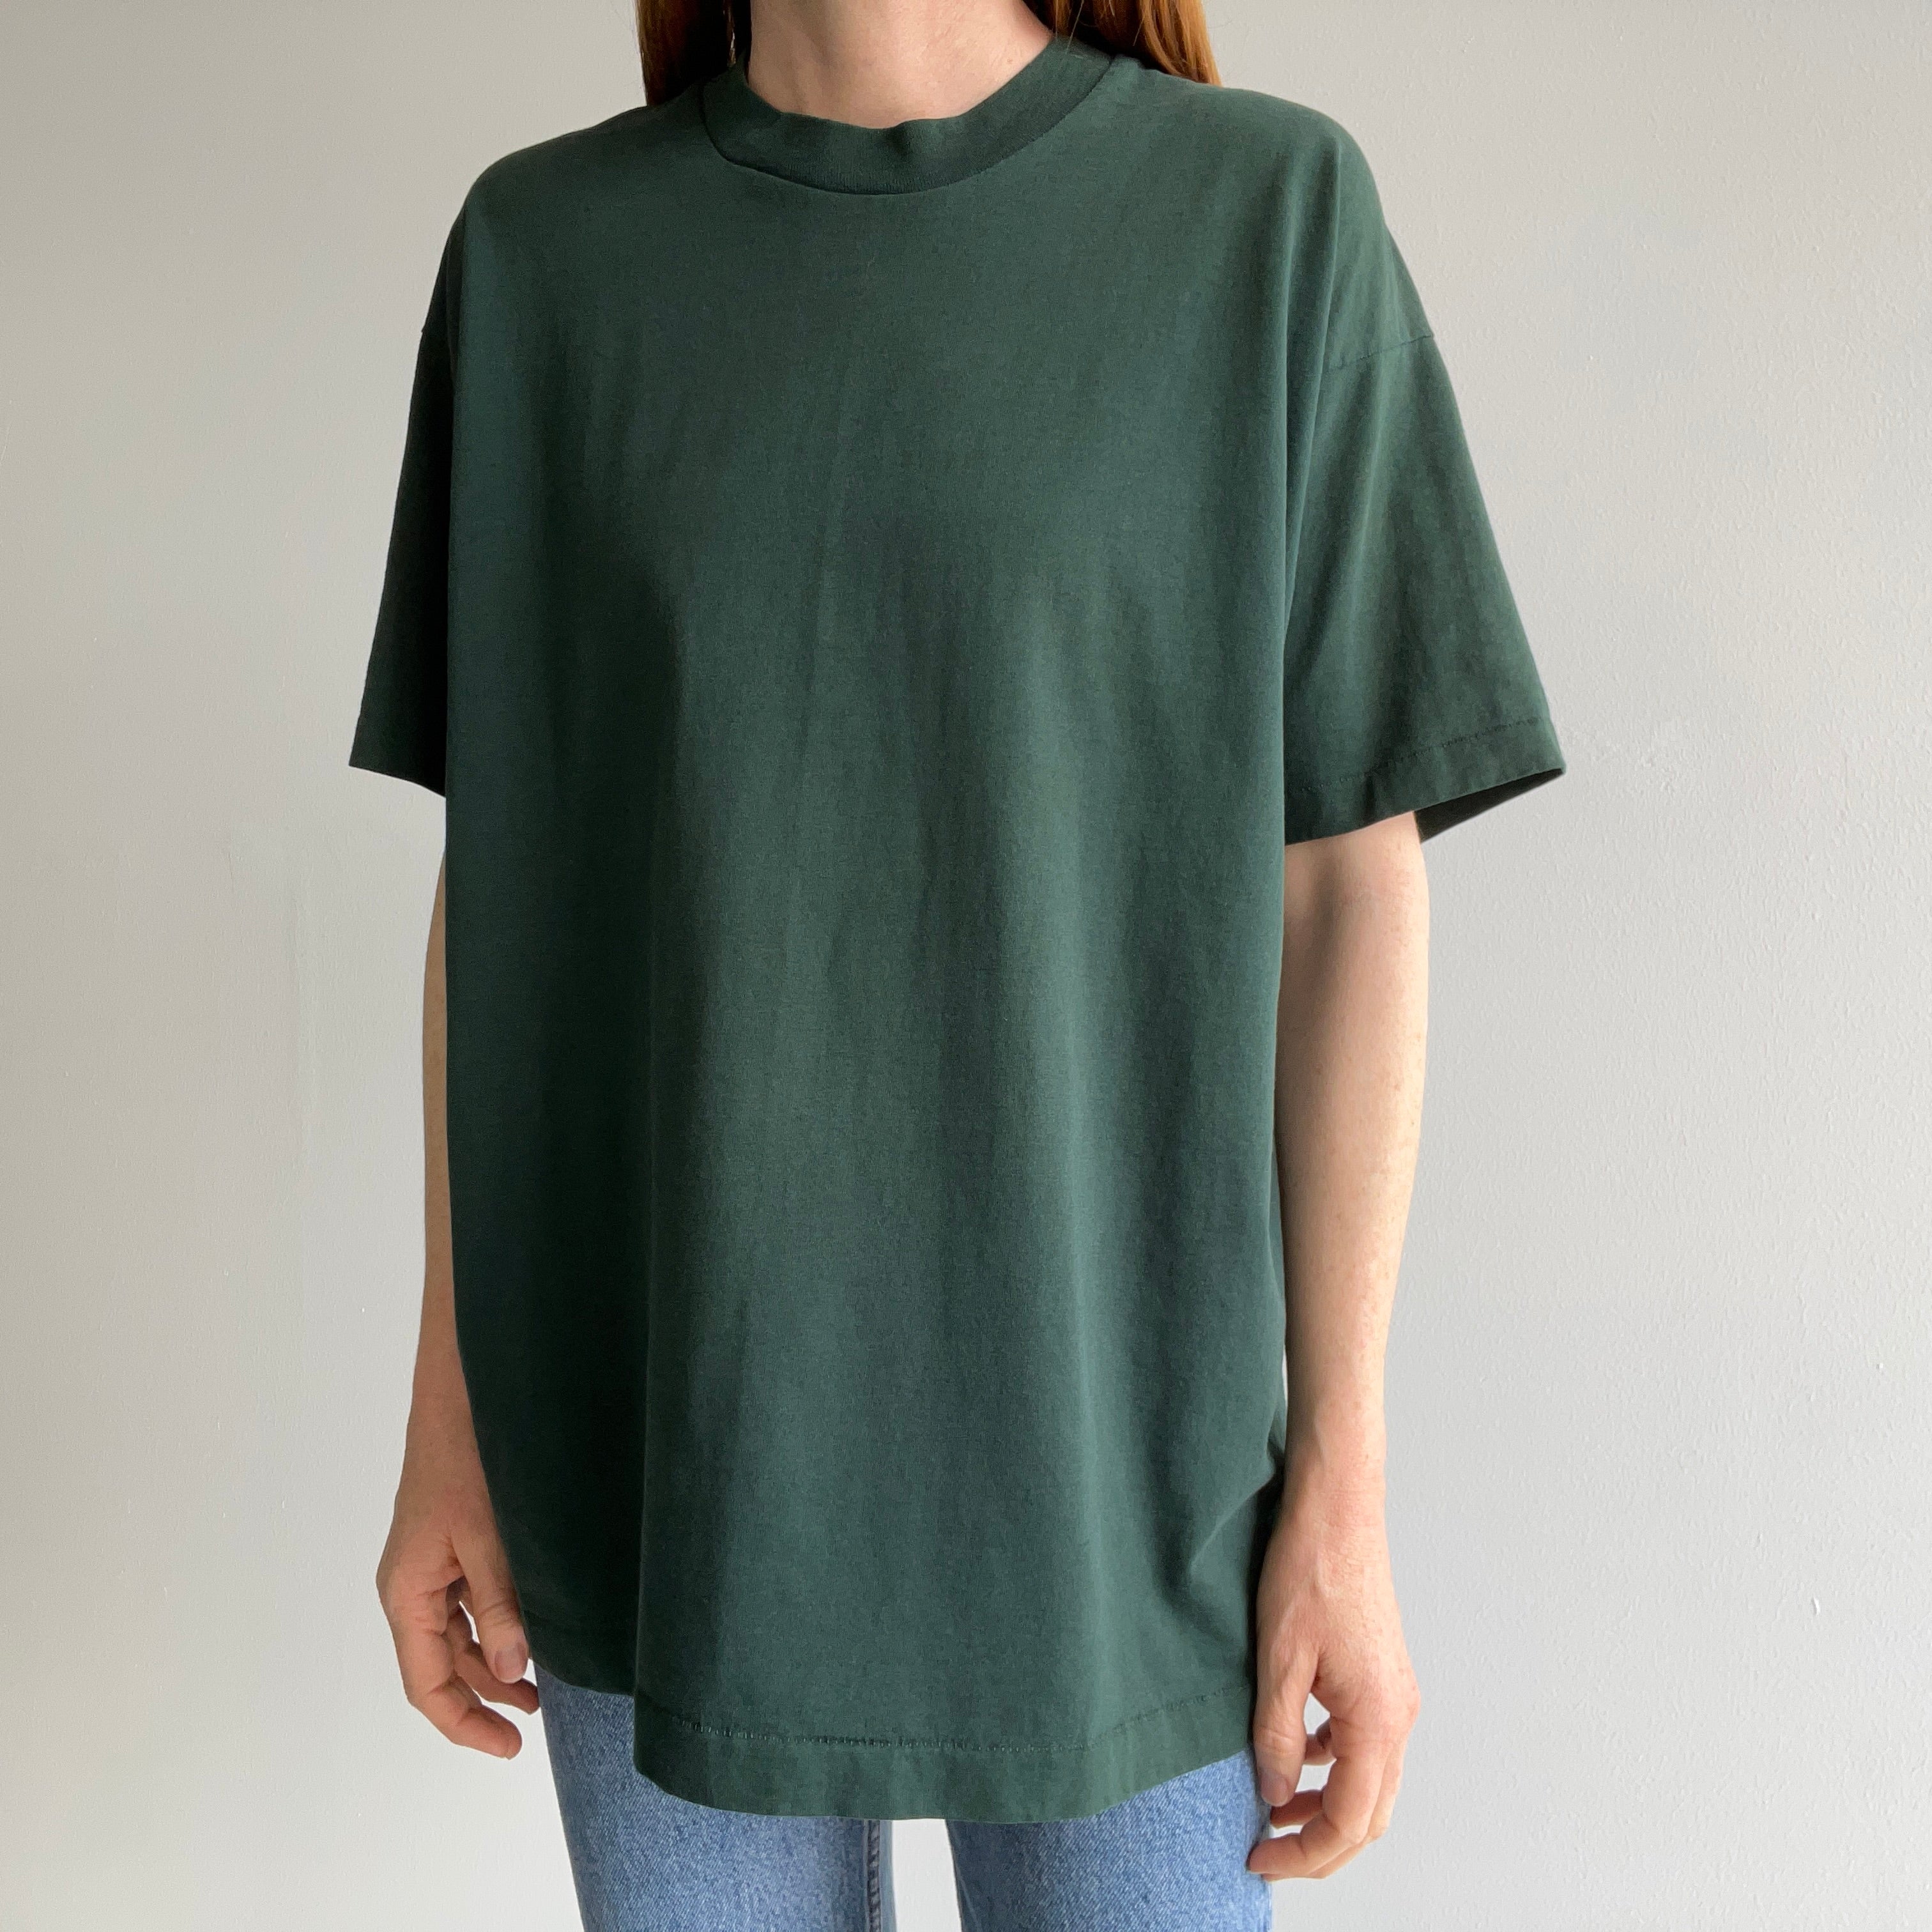 1980s Dark Green T-Shirt by FOTL Best